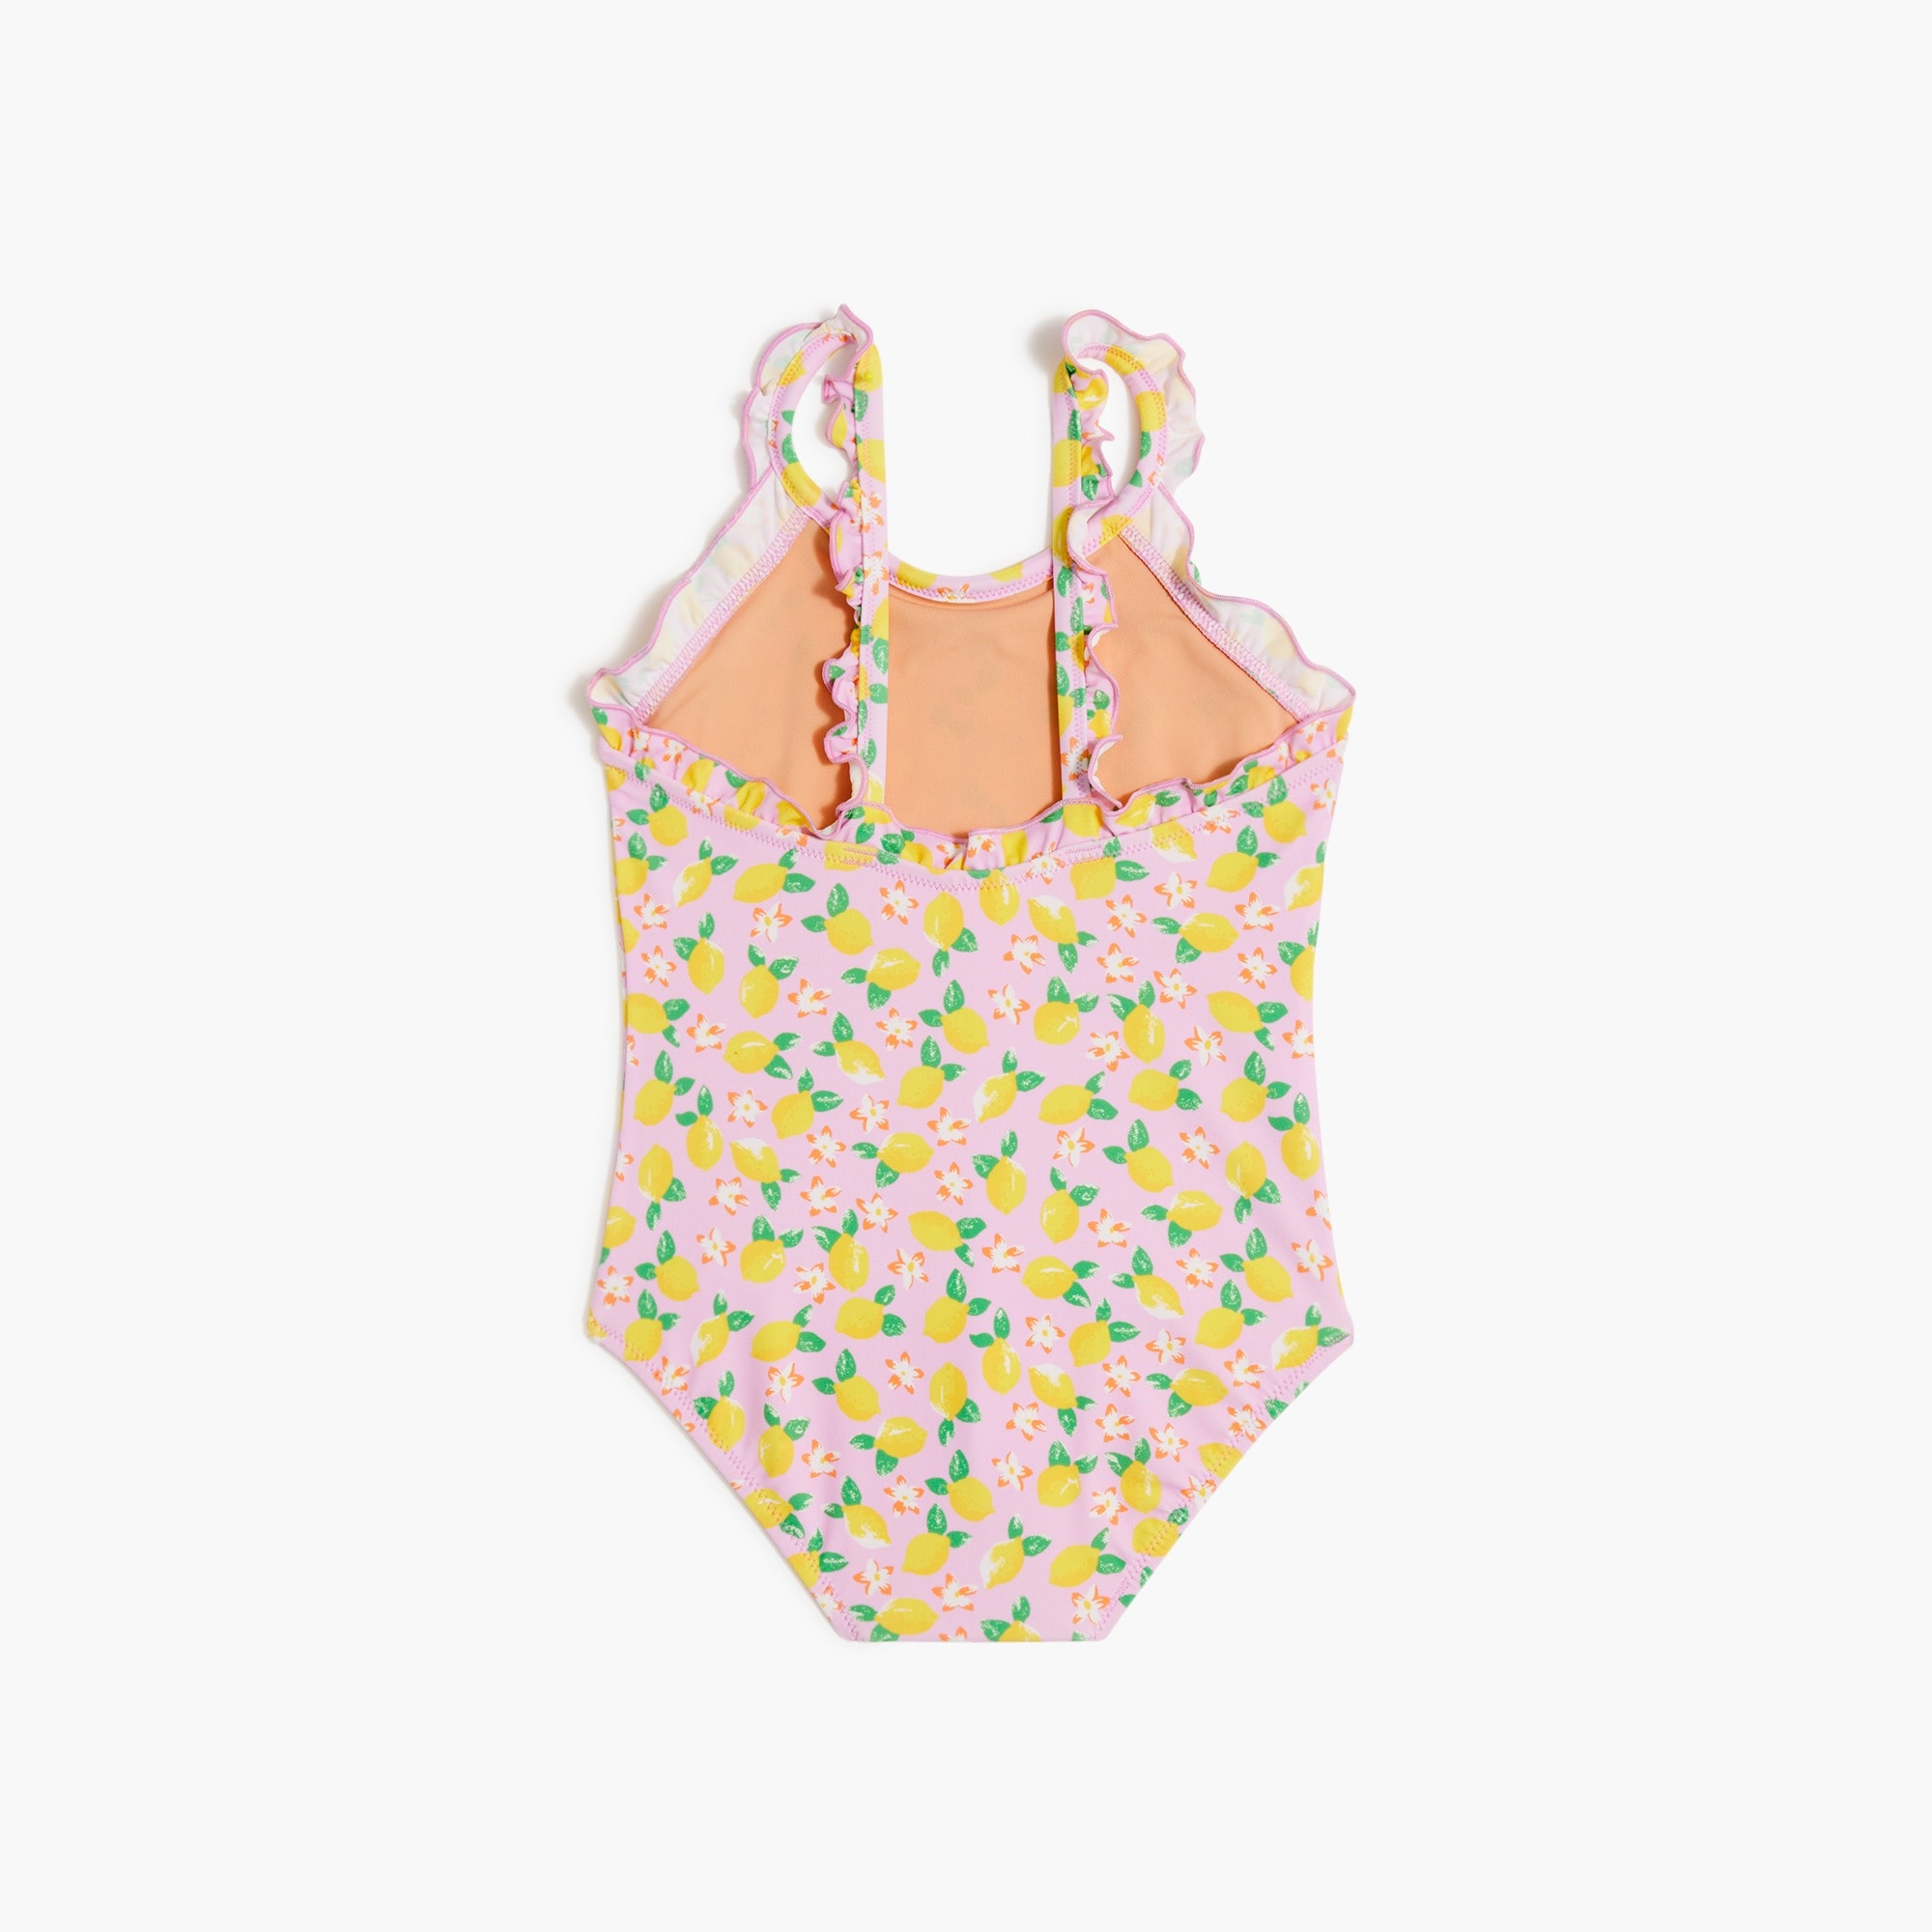 Girls' lemon ruffle one-piece swimsuit